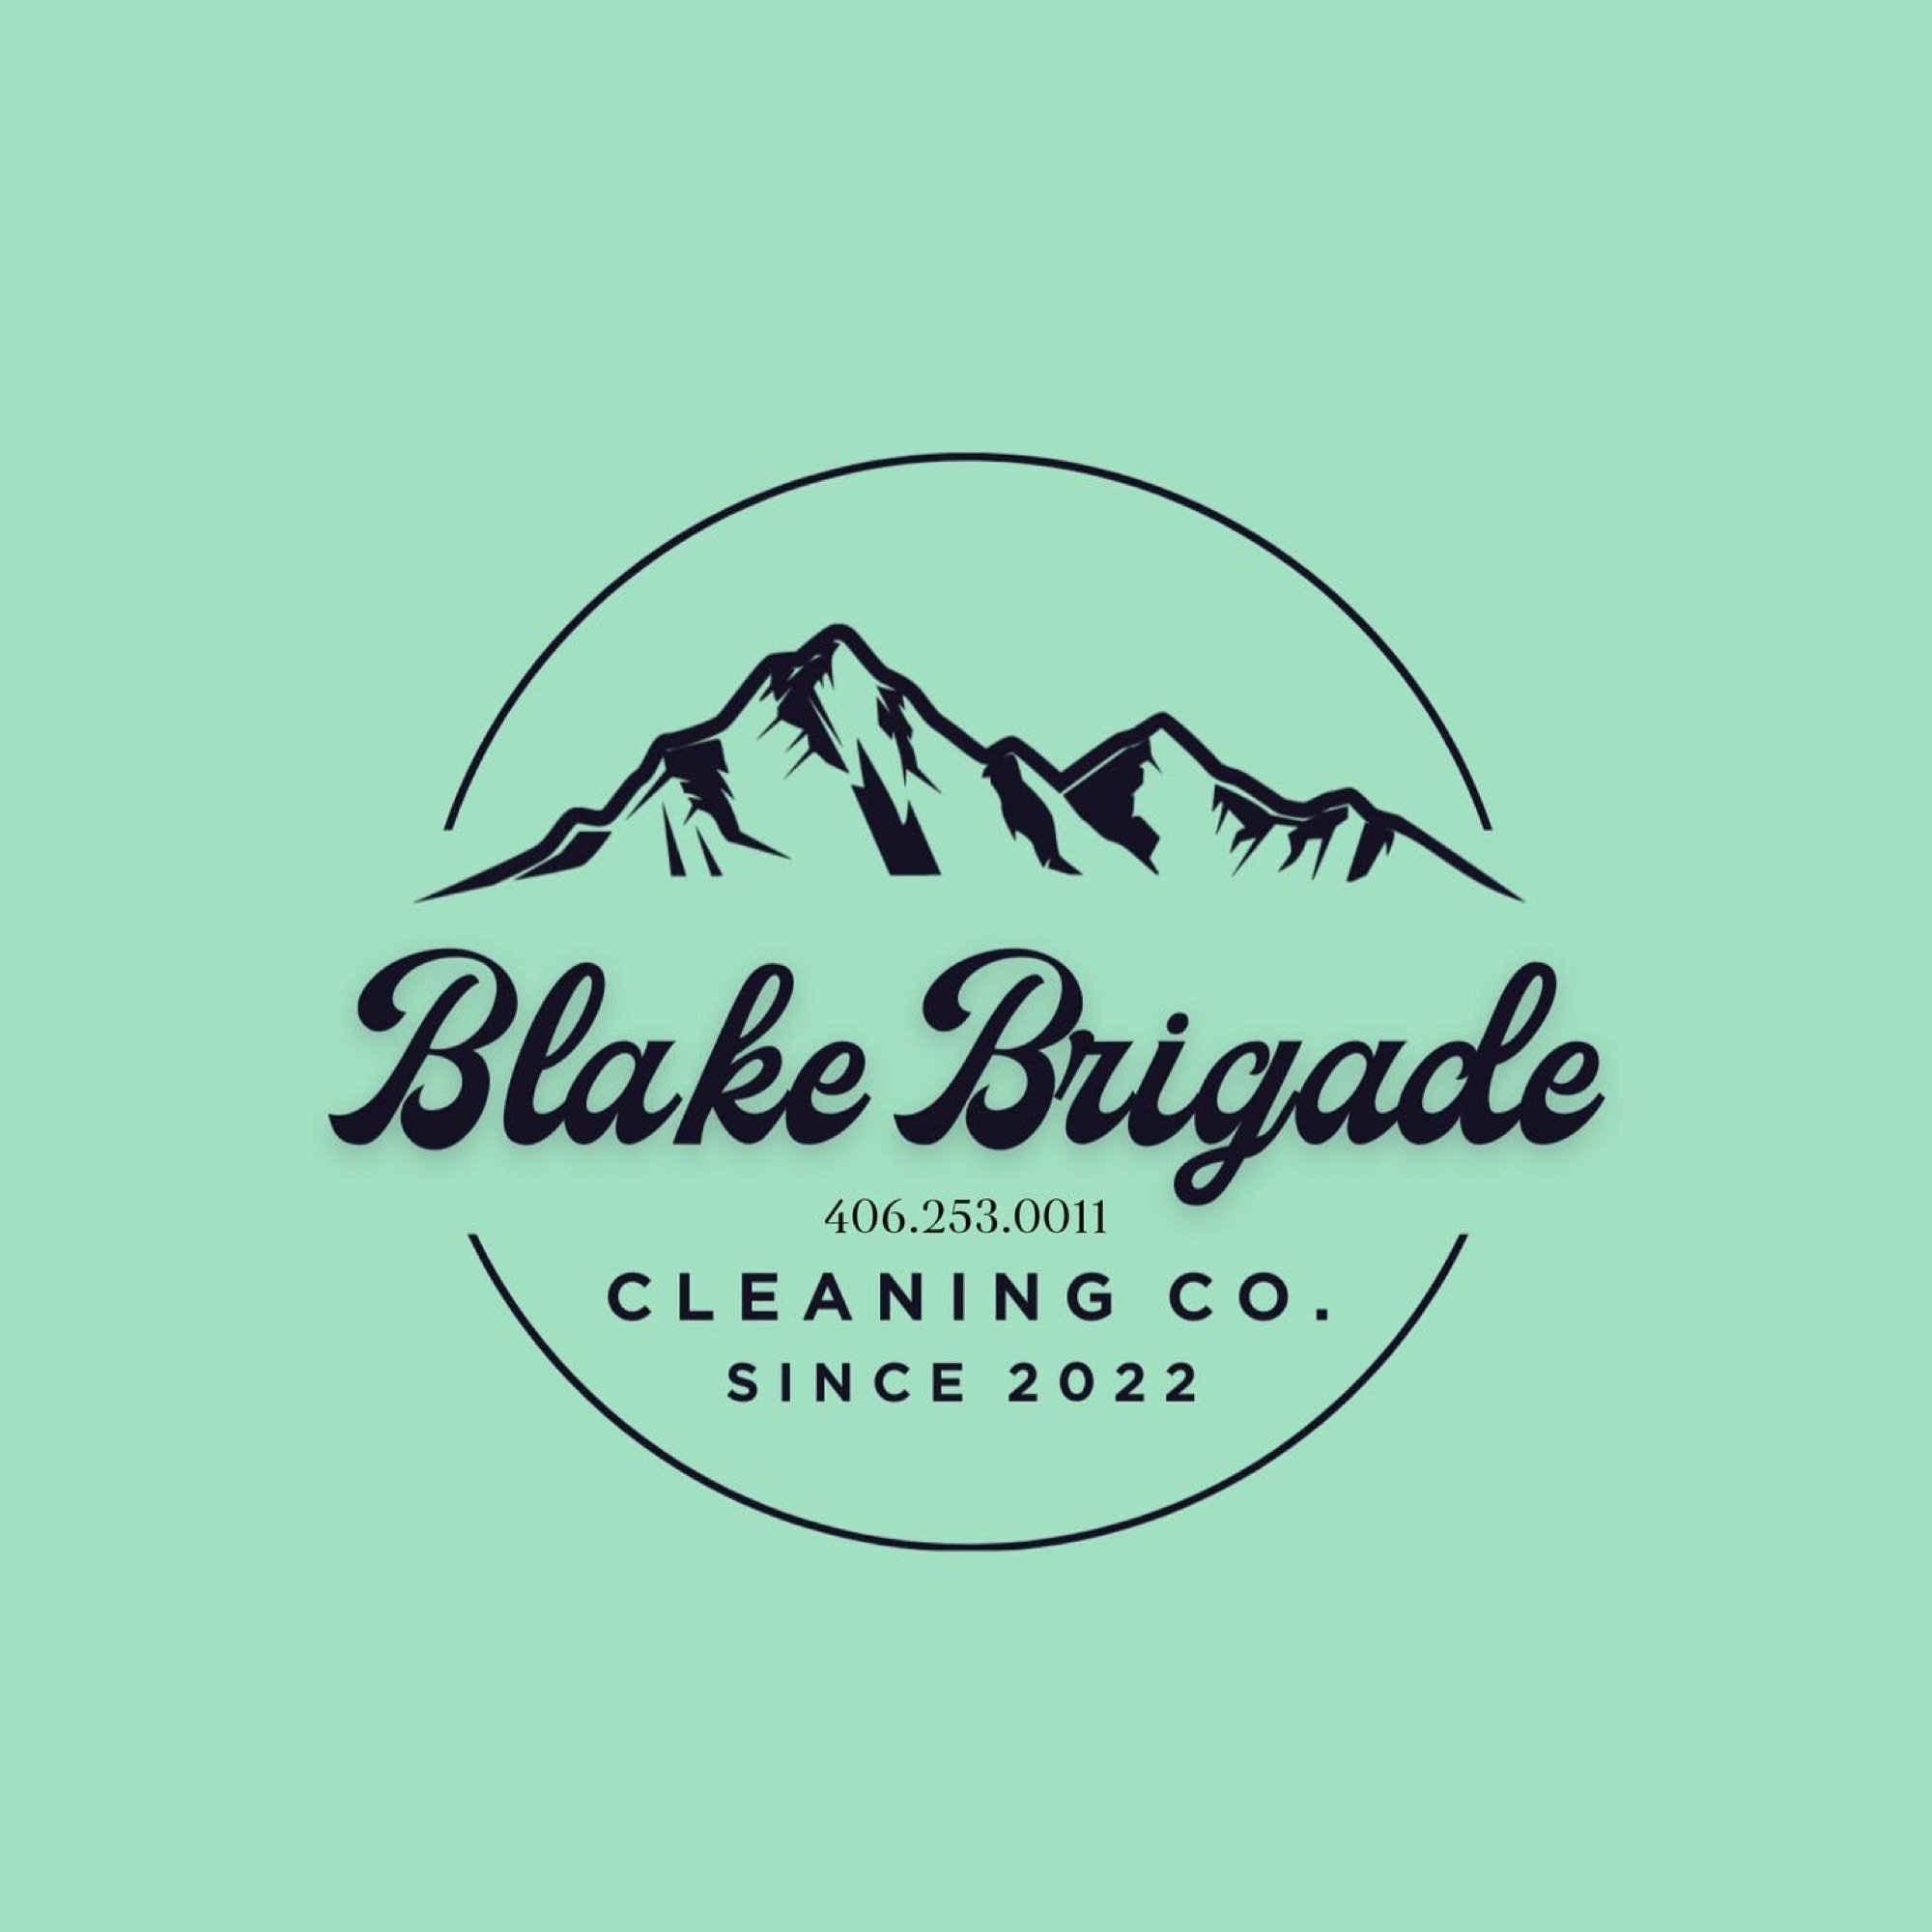 Blake Brigade Cleaning Company Logo